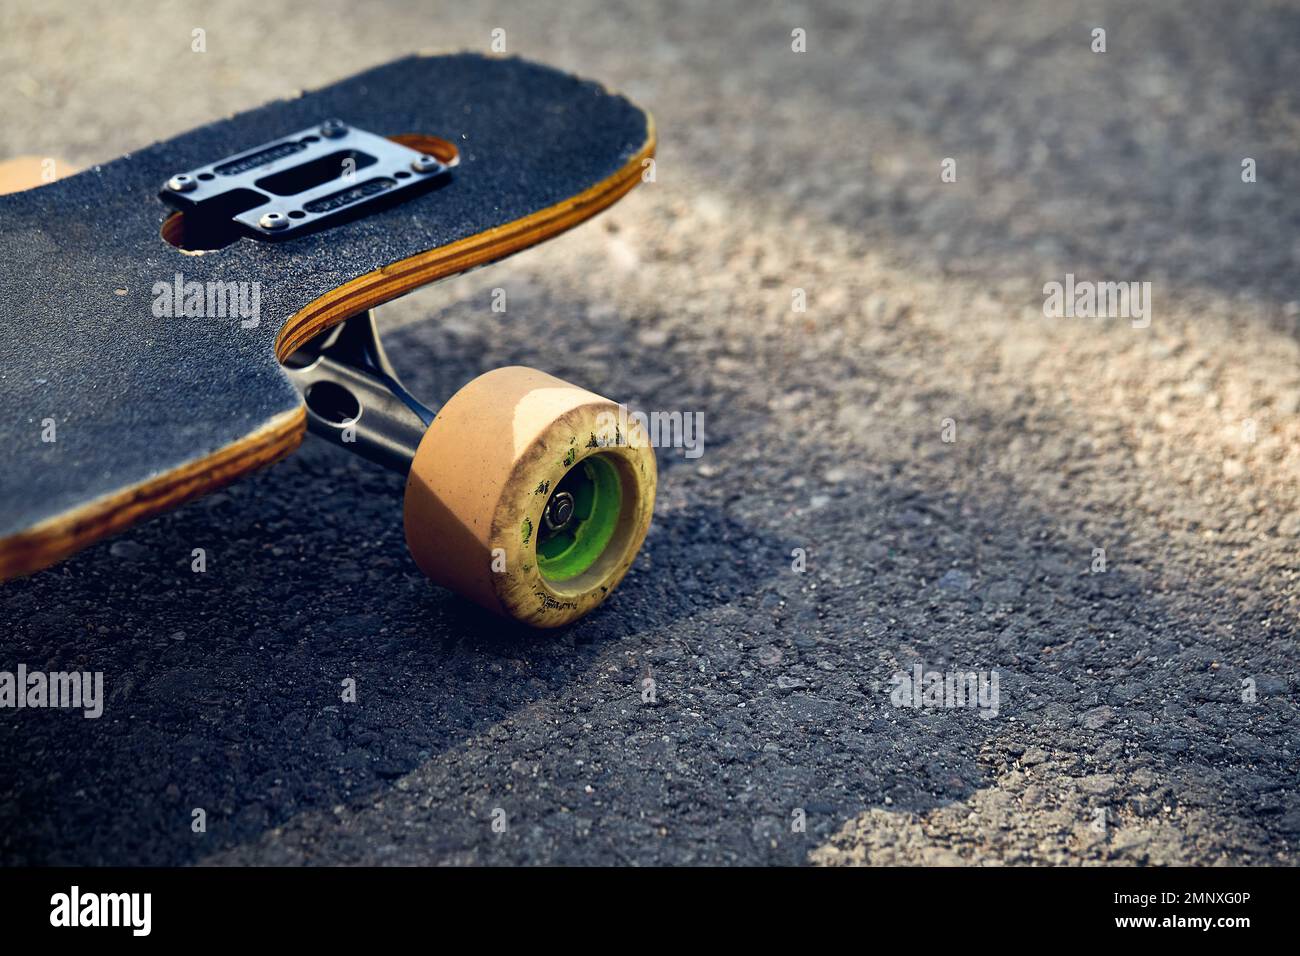 Skate board longboard at mountain asphalt road close up shot at of tail with wheels detail Stock Photo